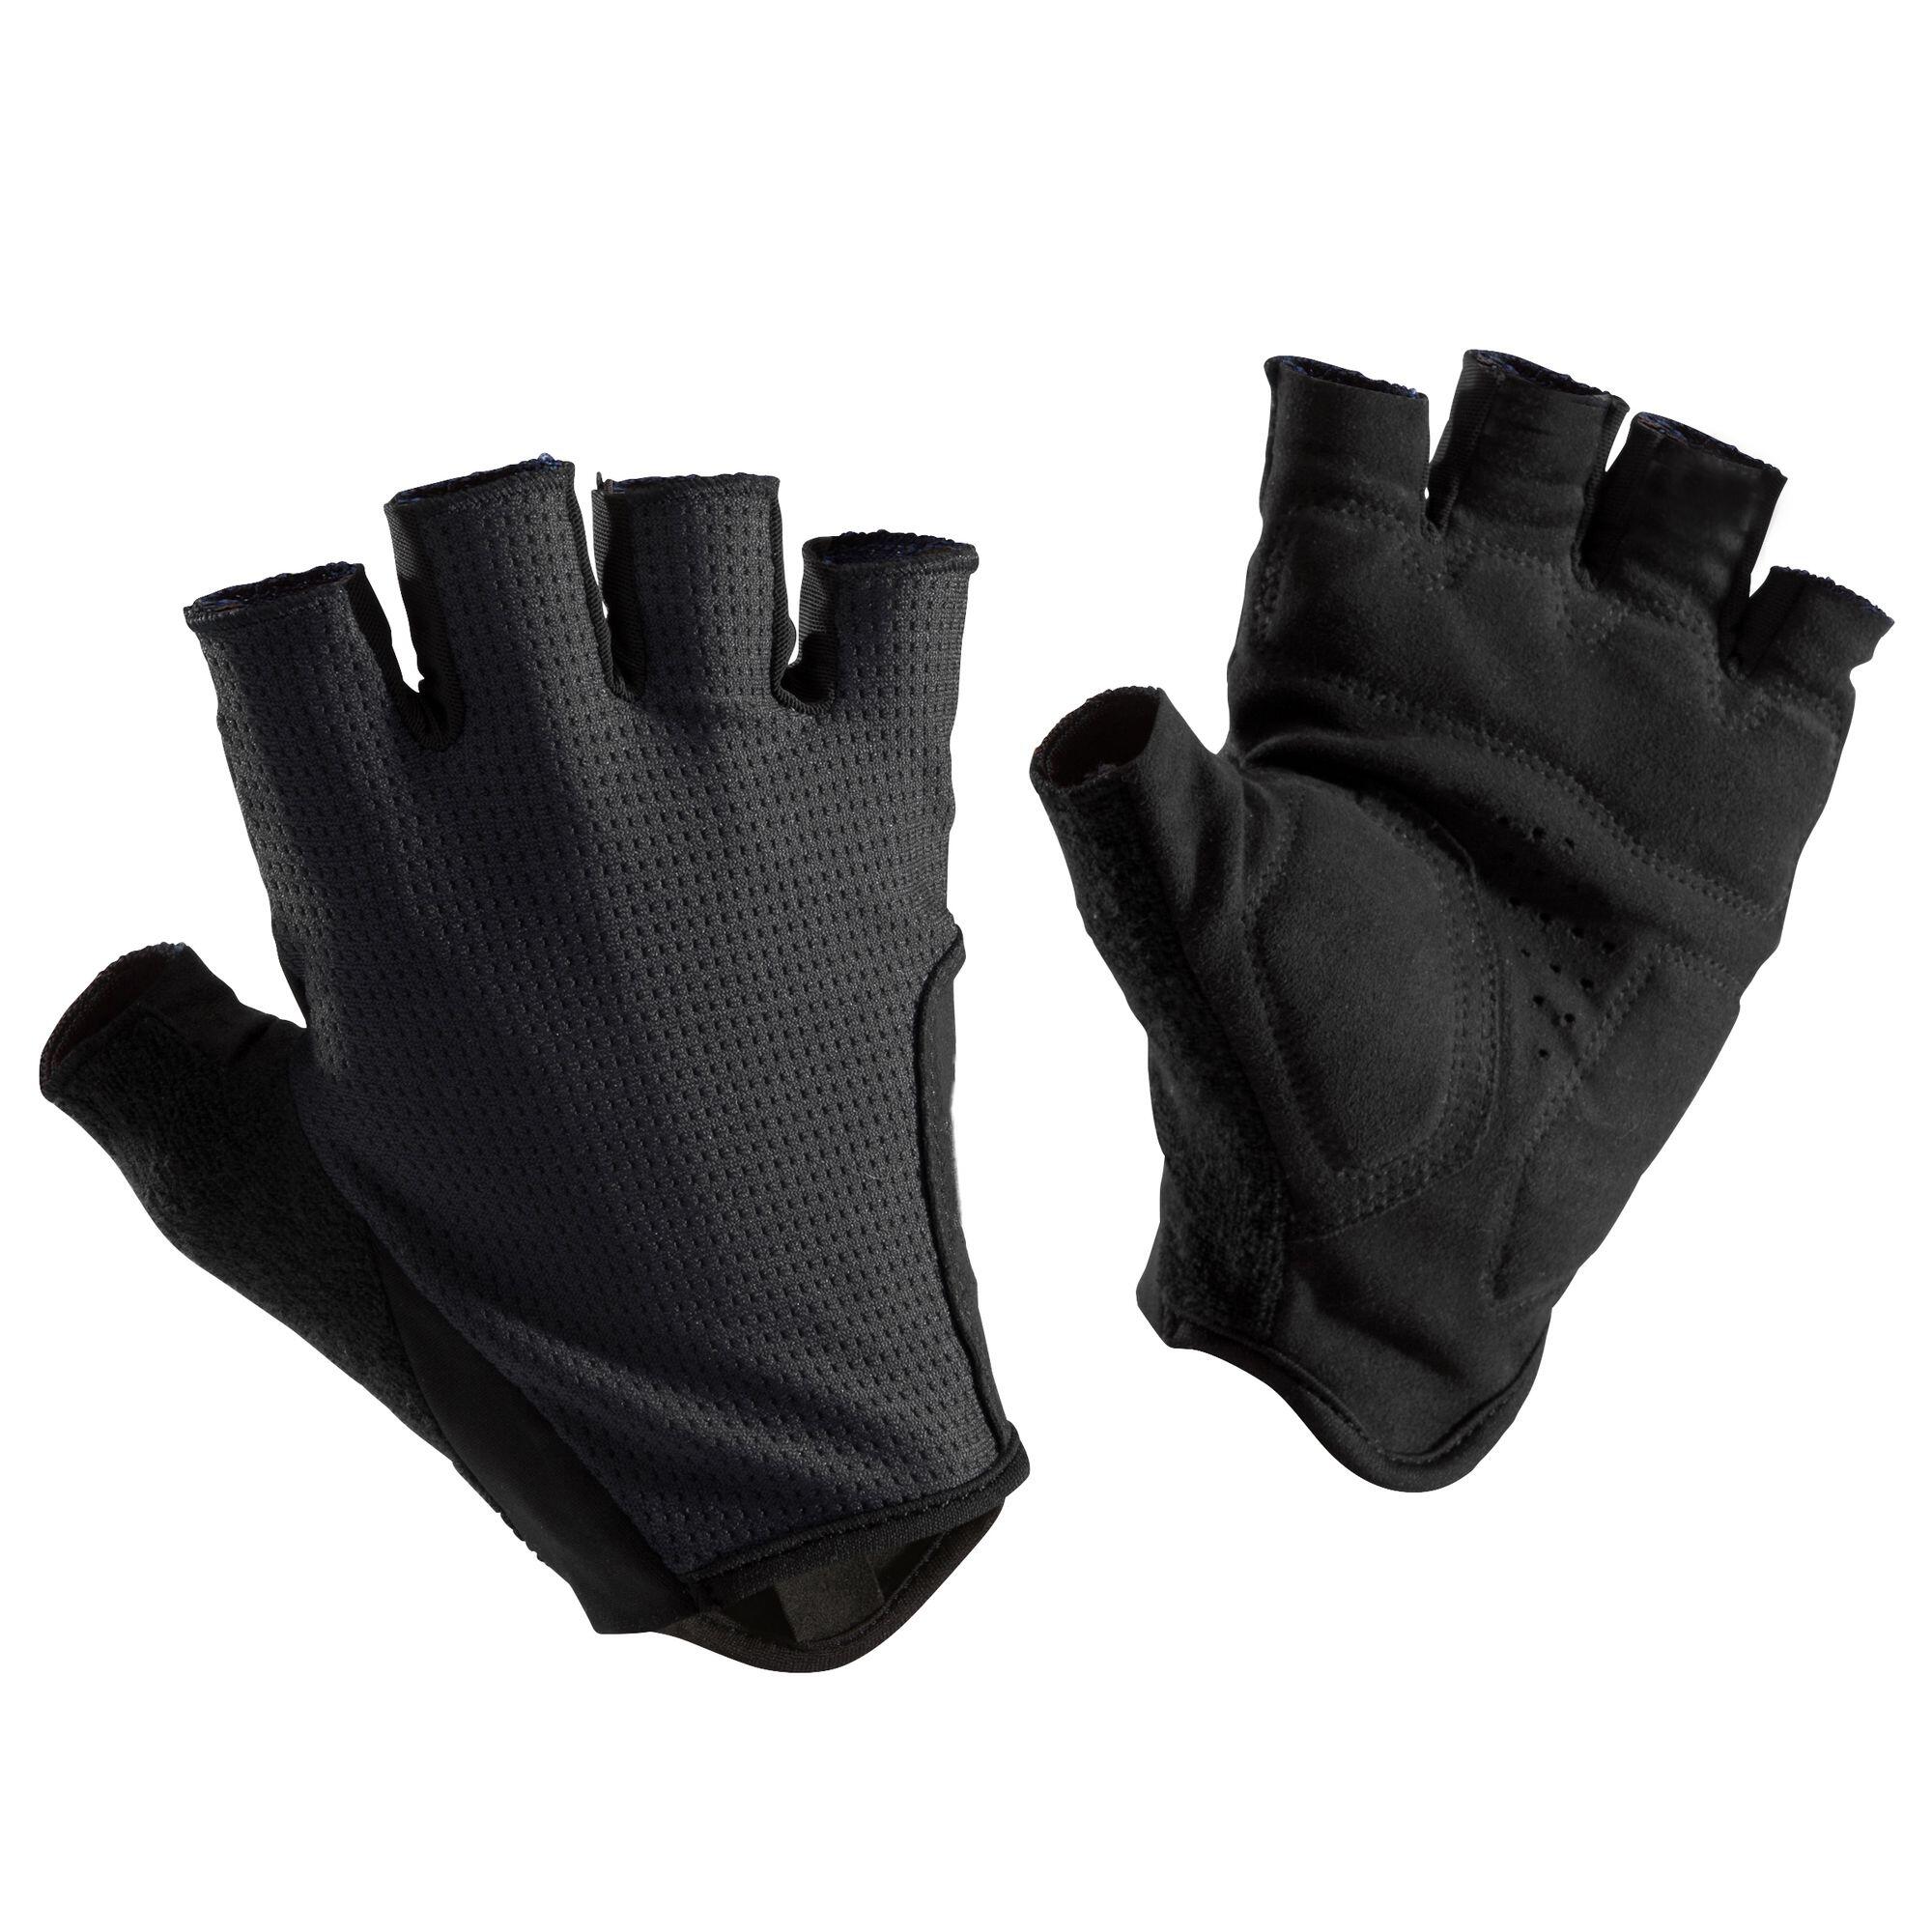 Road Cycling Gloves - 500 Black - Black - Van rysel - Decathlon